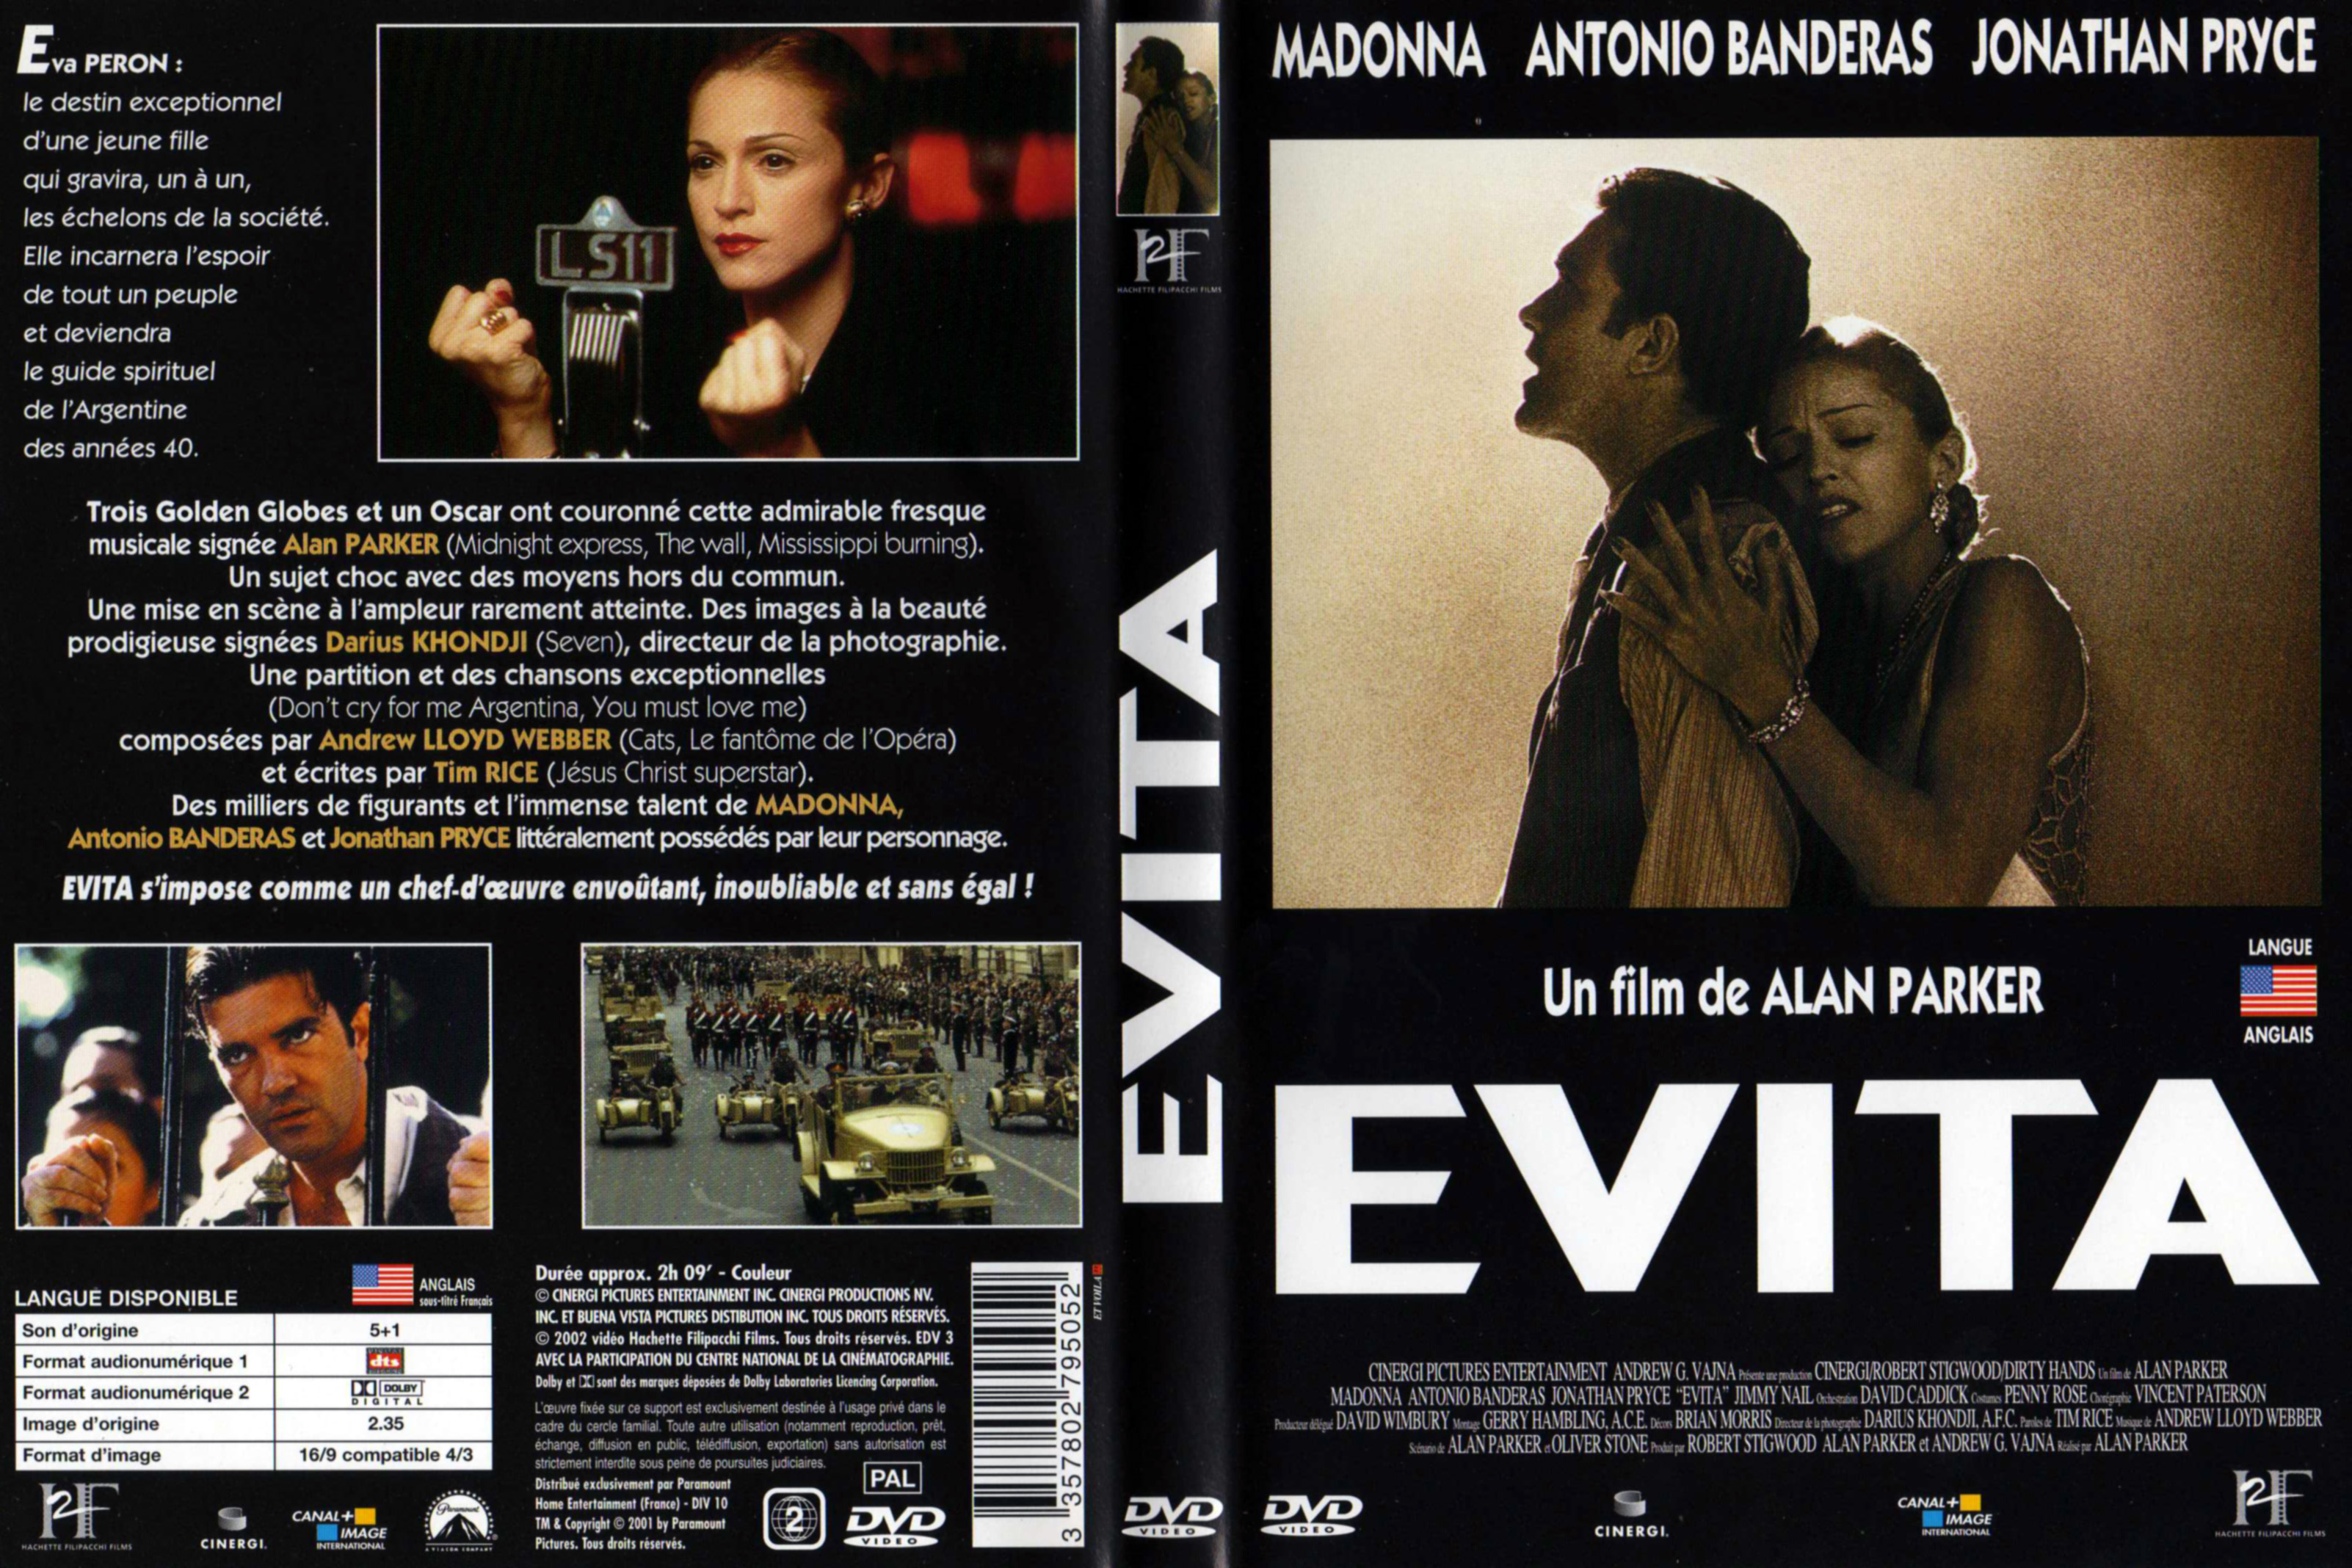 Jaquette DVD Evita v2